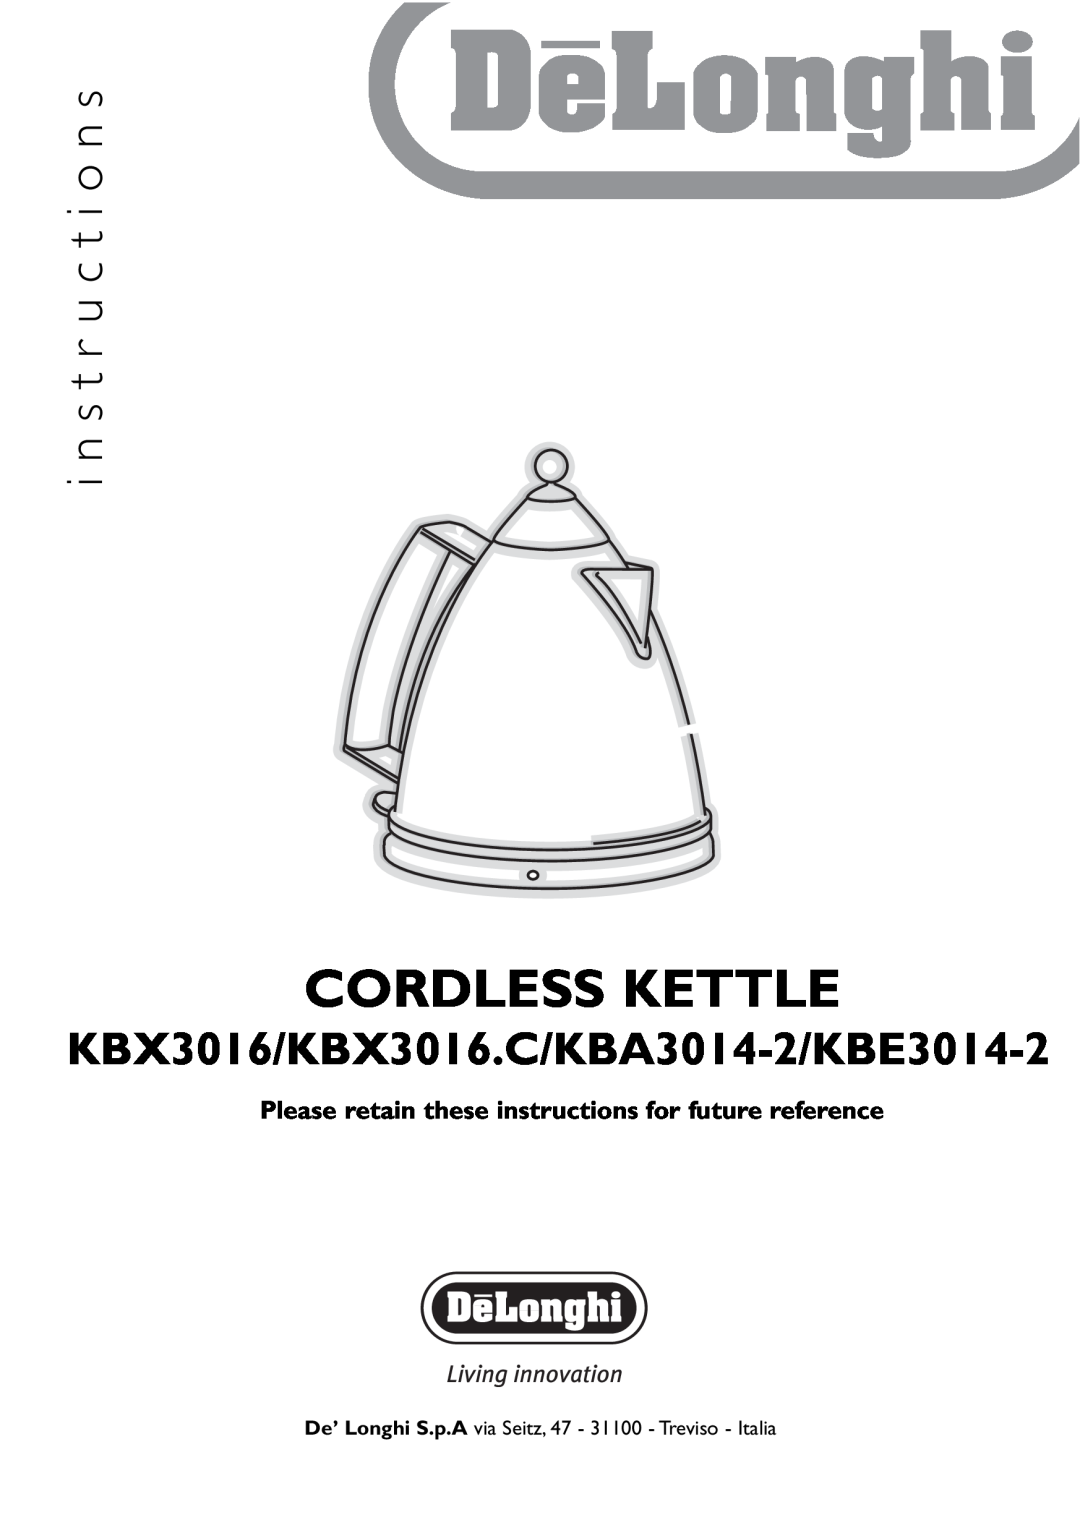 DeLonghi manual Cordless Kettle, i n s t r u c t i o n s, KBX3016/KBX3016.C/KBA3014-2/KBE3014-2 